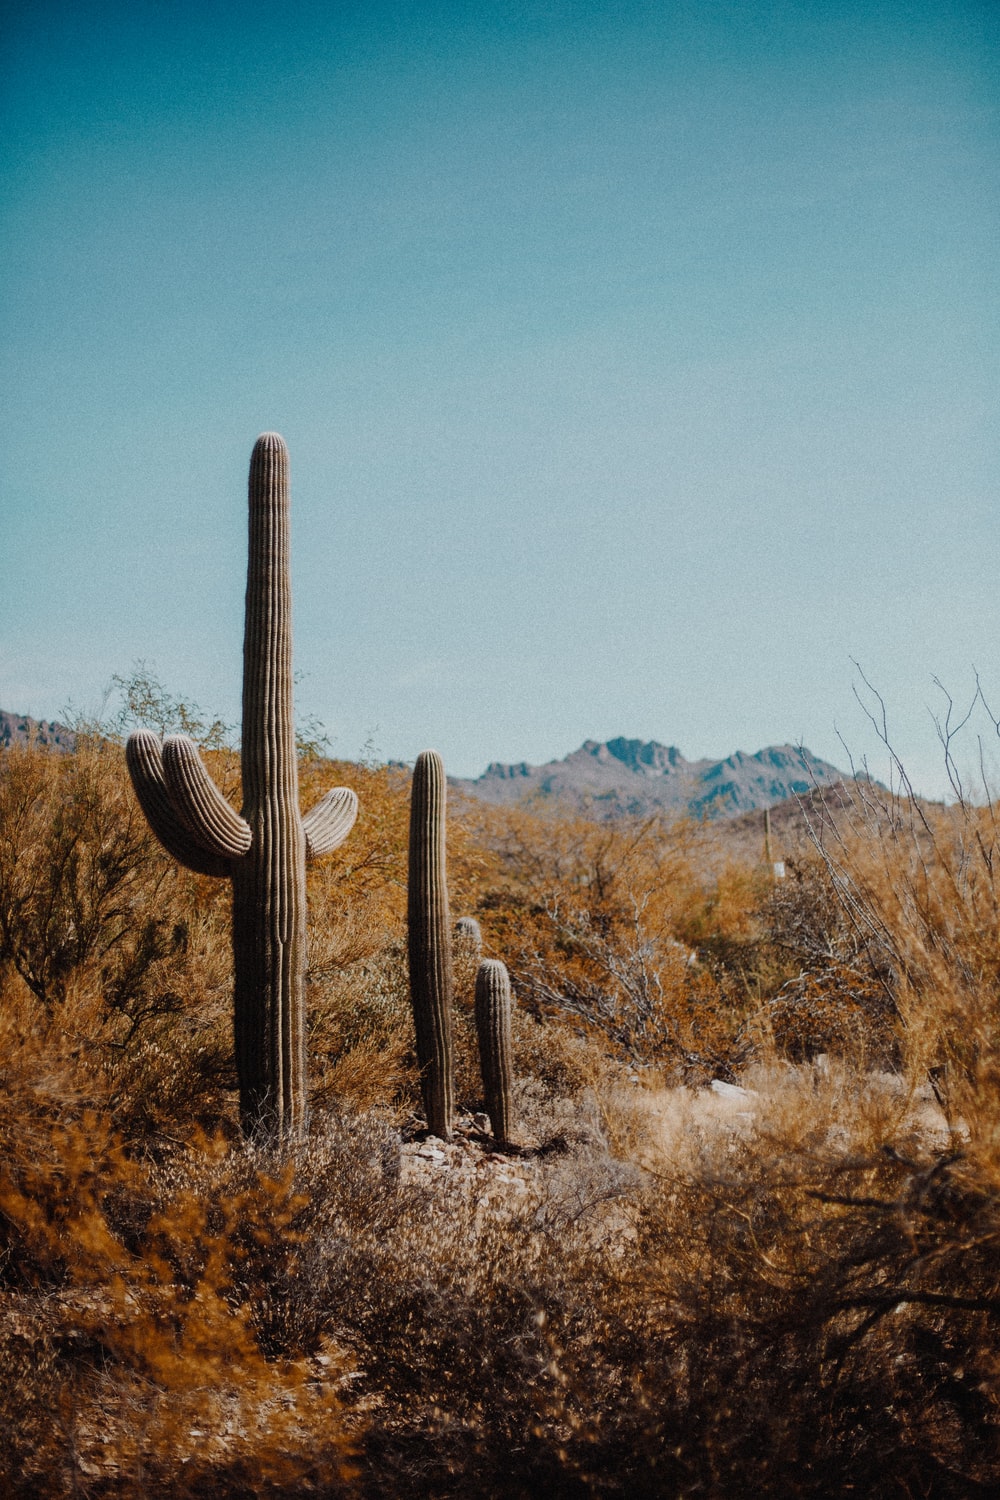 Desert Cactus Picture. Download Free Image